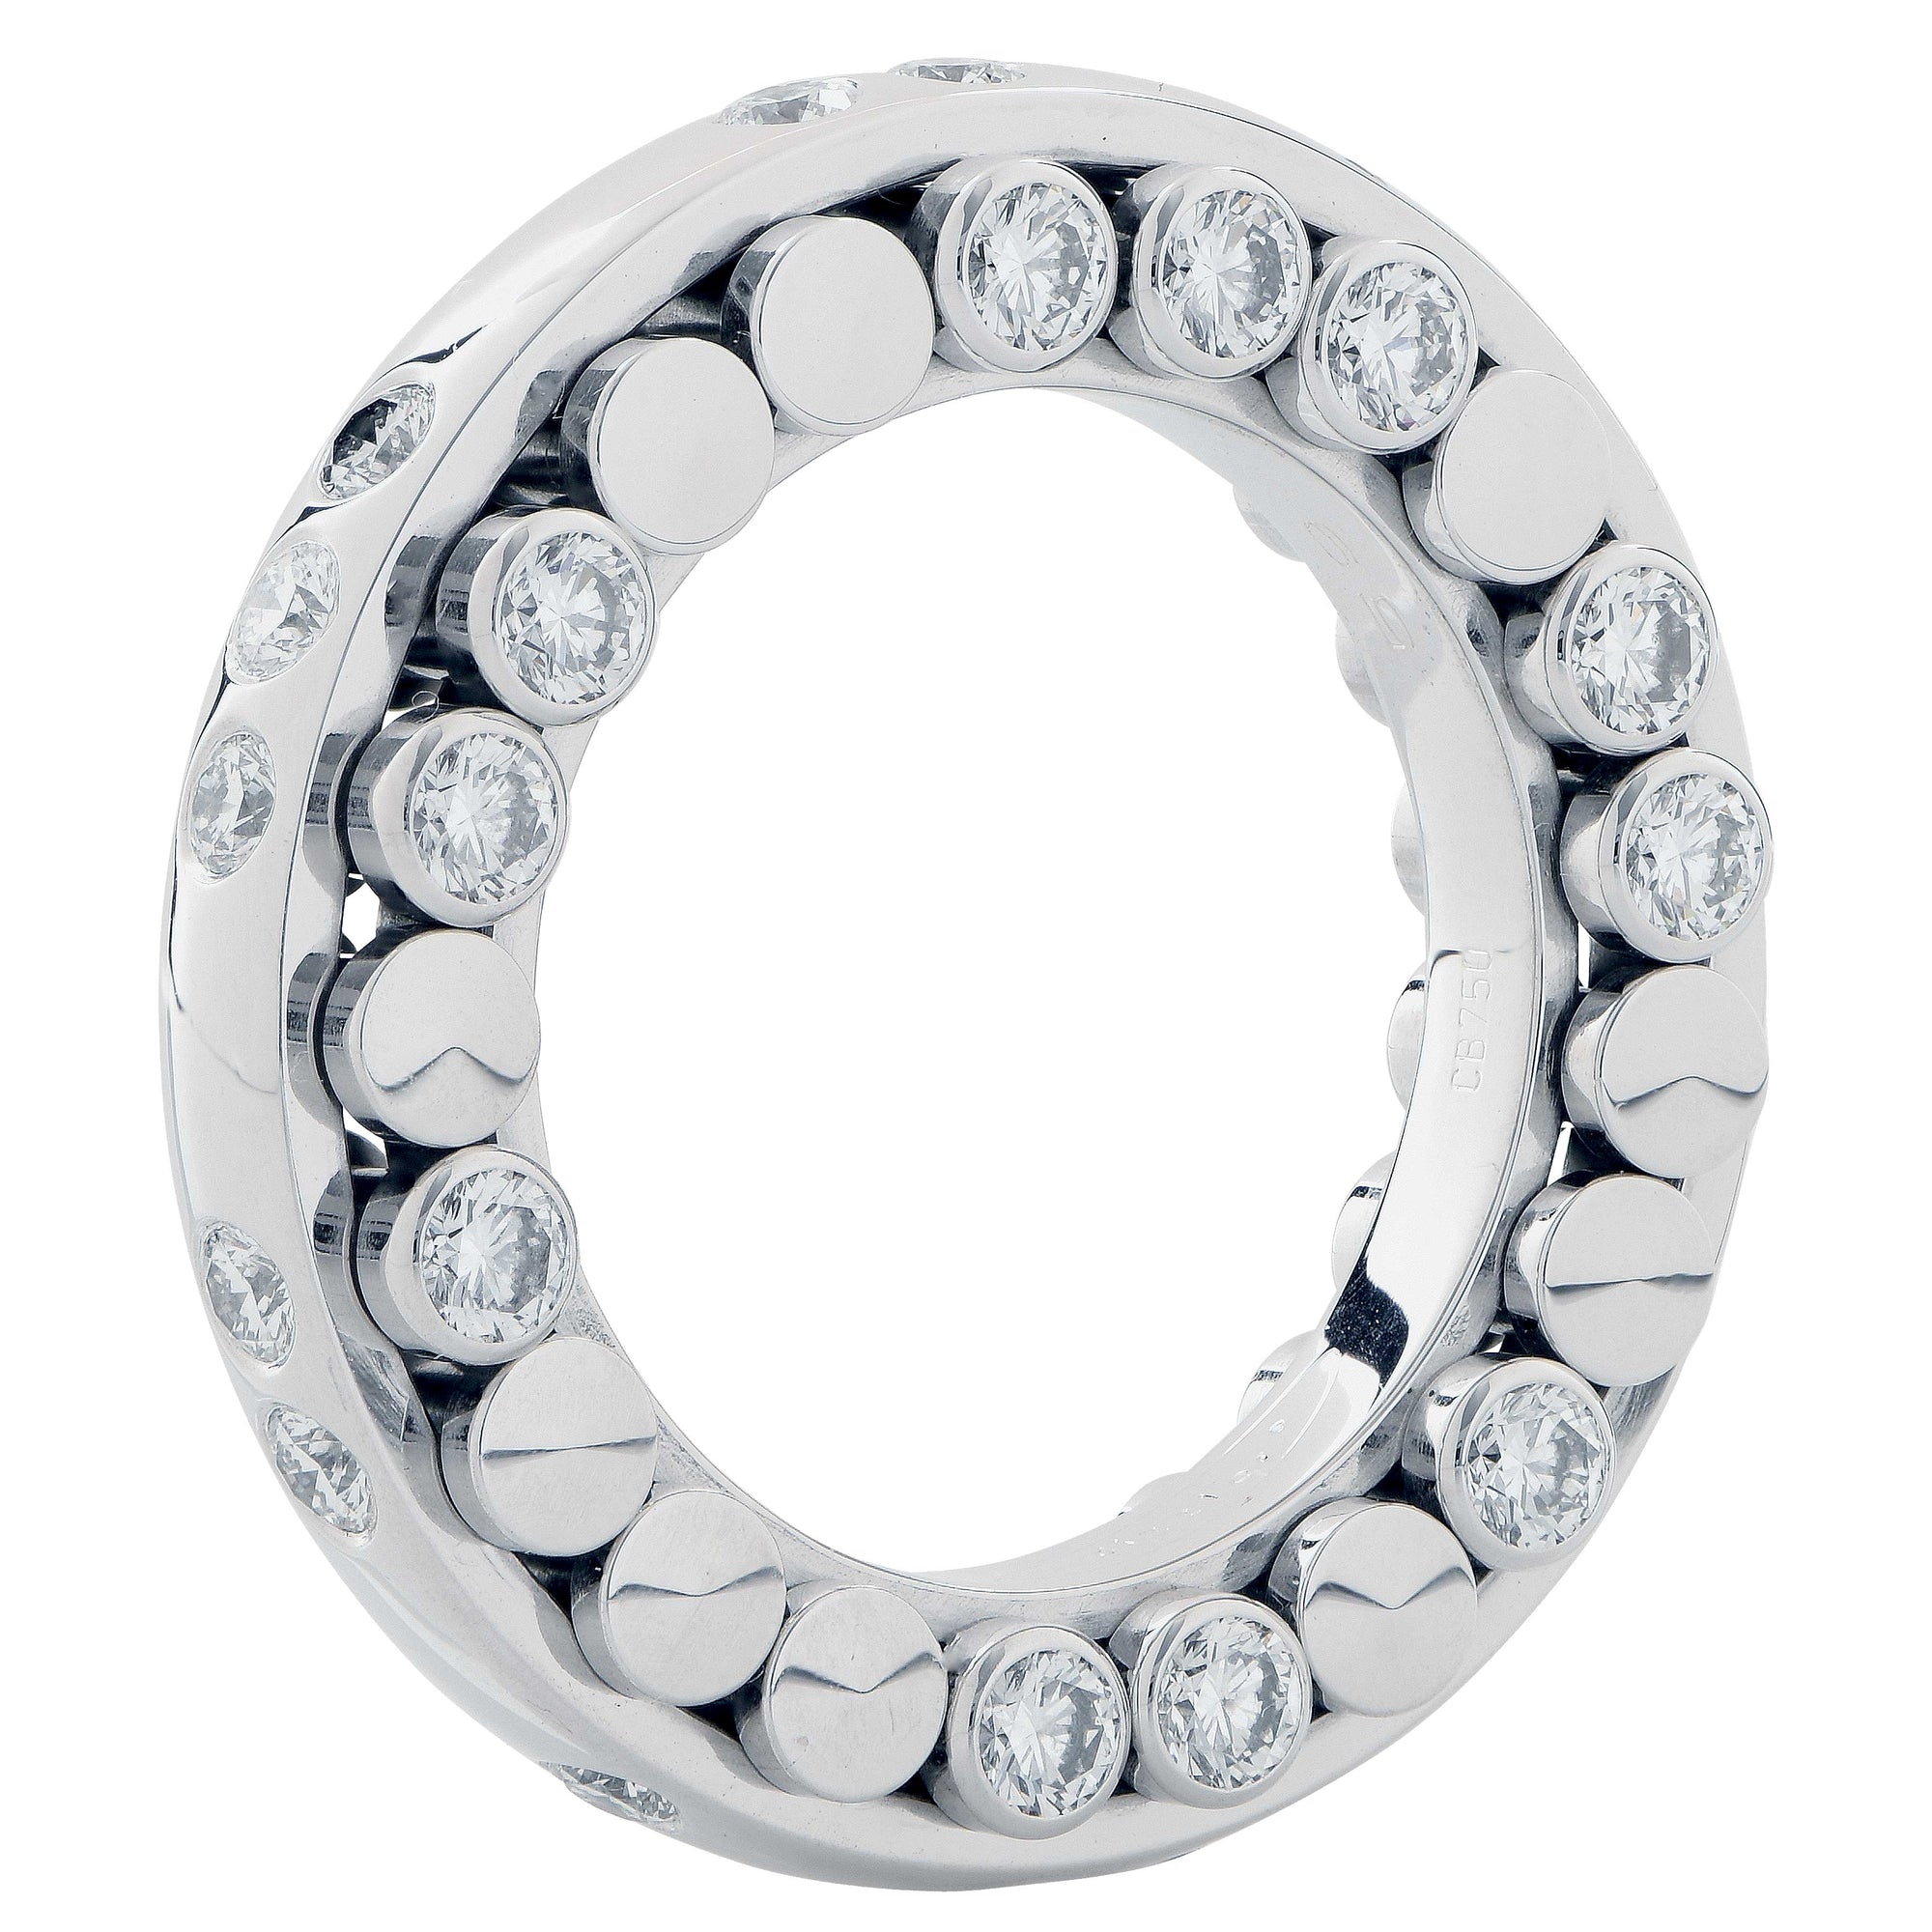 Diamond Ring Watch by Bucherer